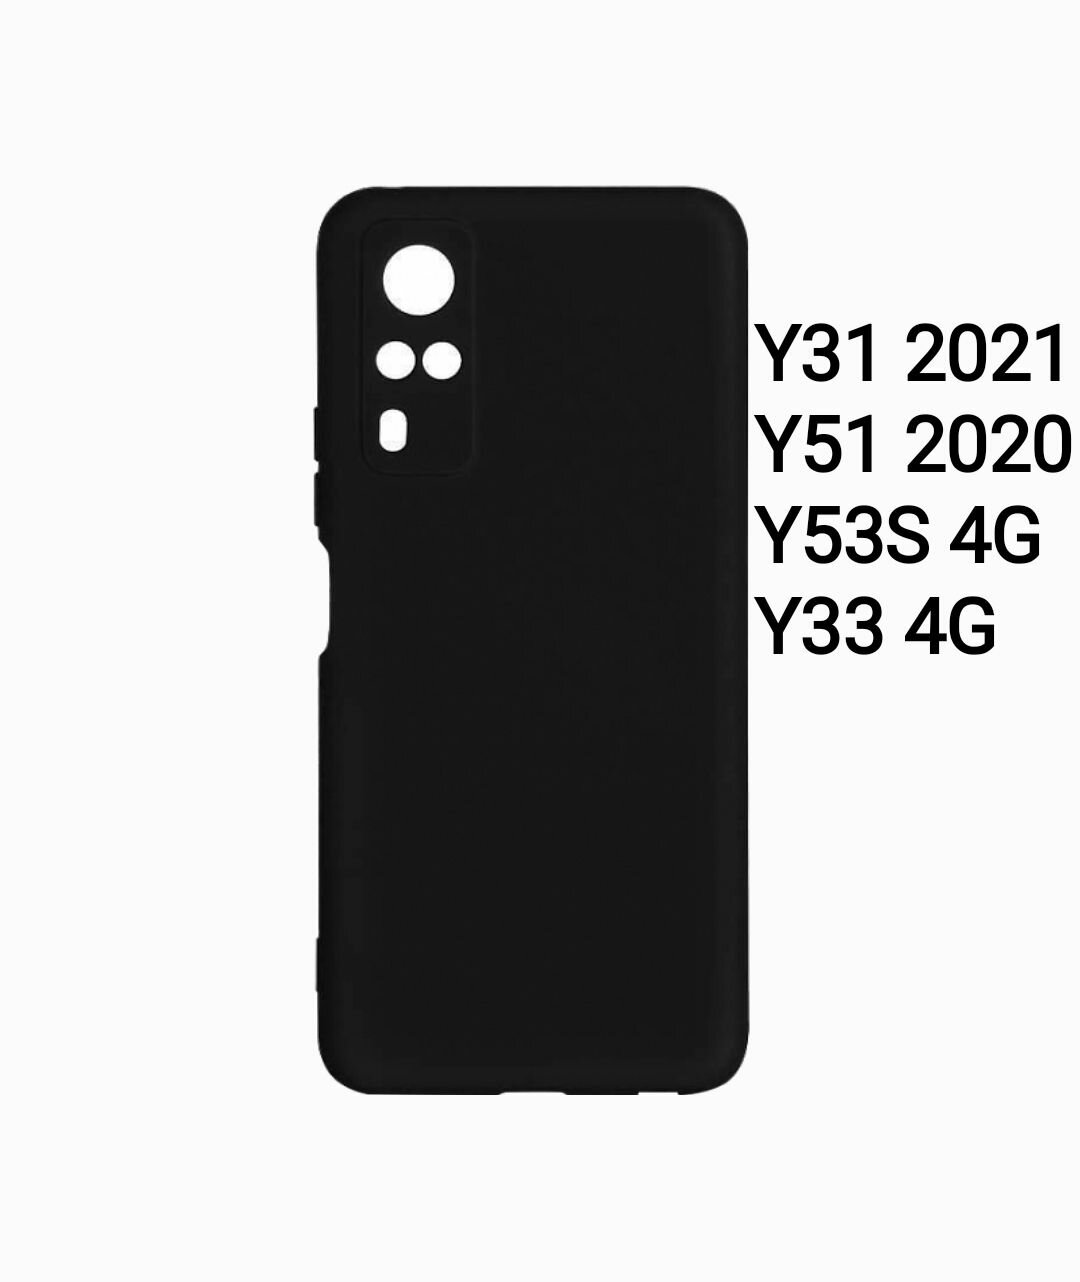 Vivo Y31 2021 / Vivo Y51 2020 / Y53S 4G / Y33 4G силиконовый чёрный чехол для виво у33, у31, у51, у53с накладка, бампер софт тач soft Touch